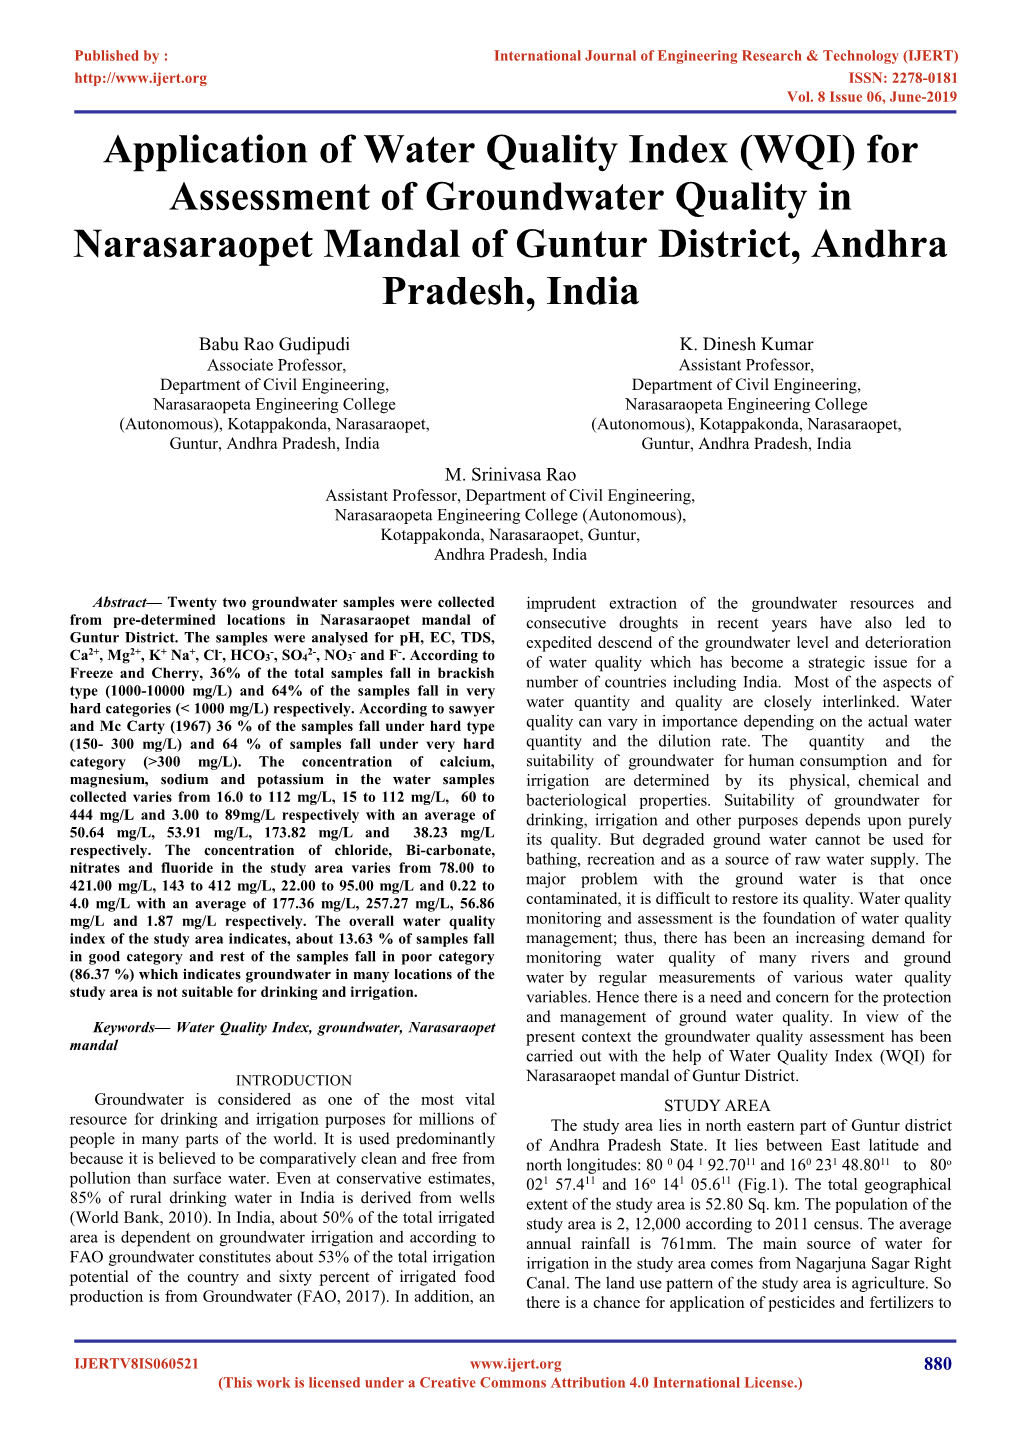 WQI) for Assessment of Groundwater Quality in Narasaraopet Mandal of Guntur District, Andhra Pradesh, India